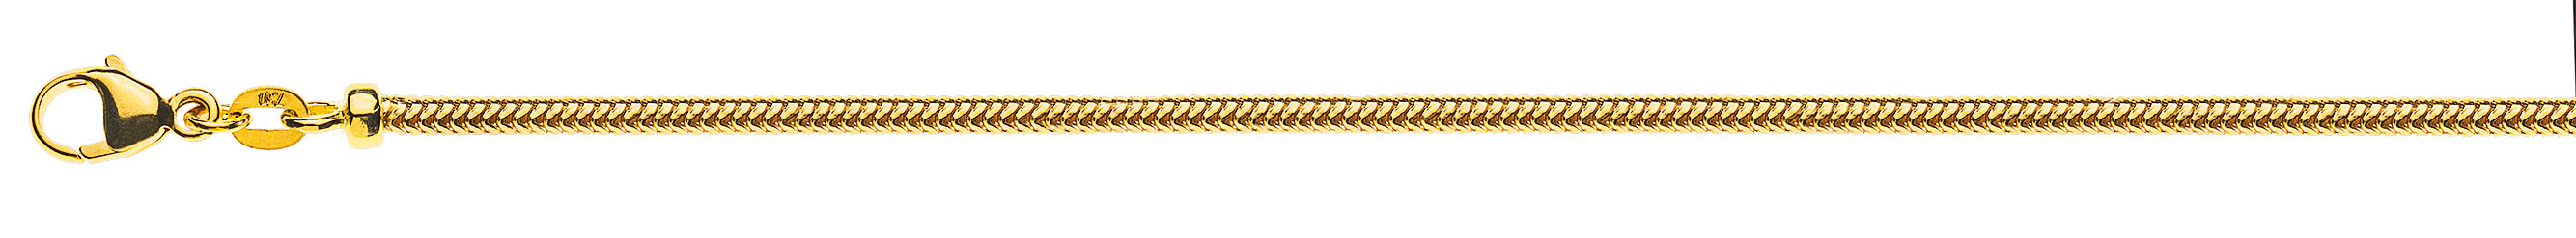 AURONOS Prestige Necklace yellow gold 18K snake chain 40cm 2.4mm